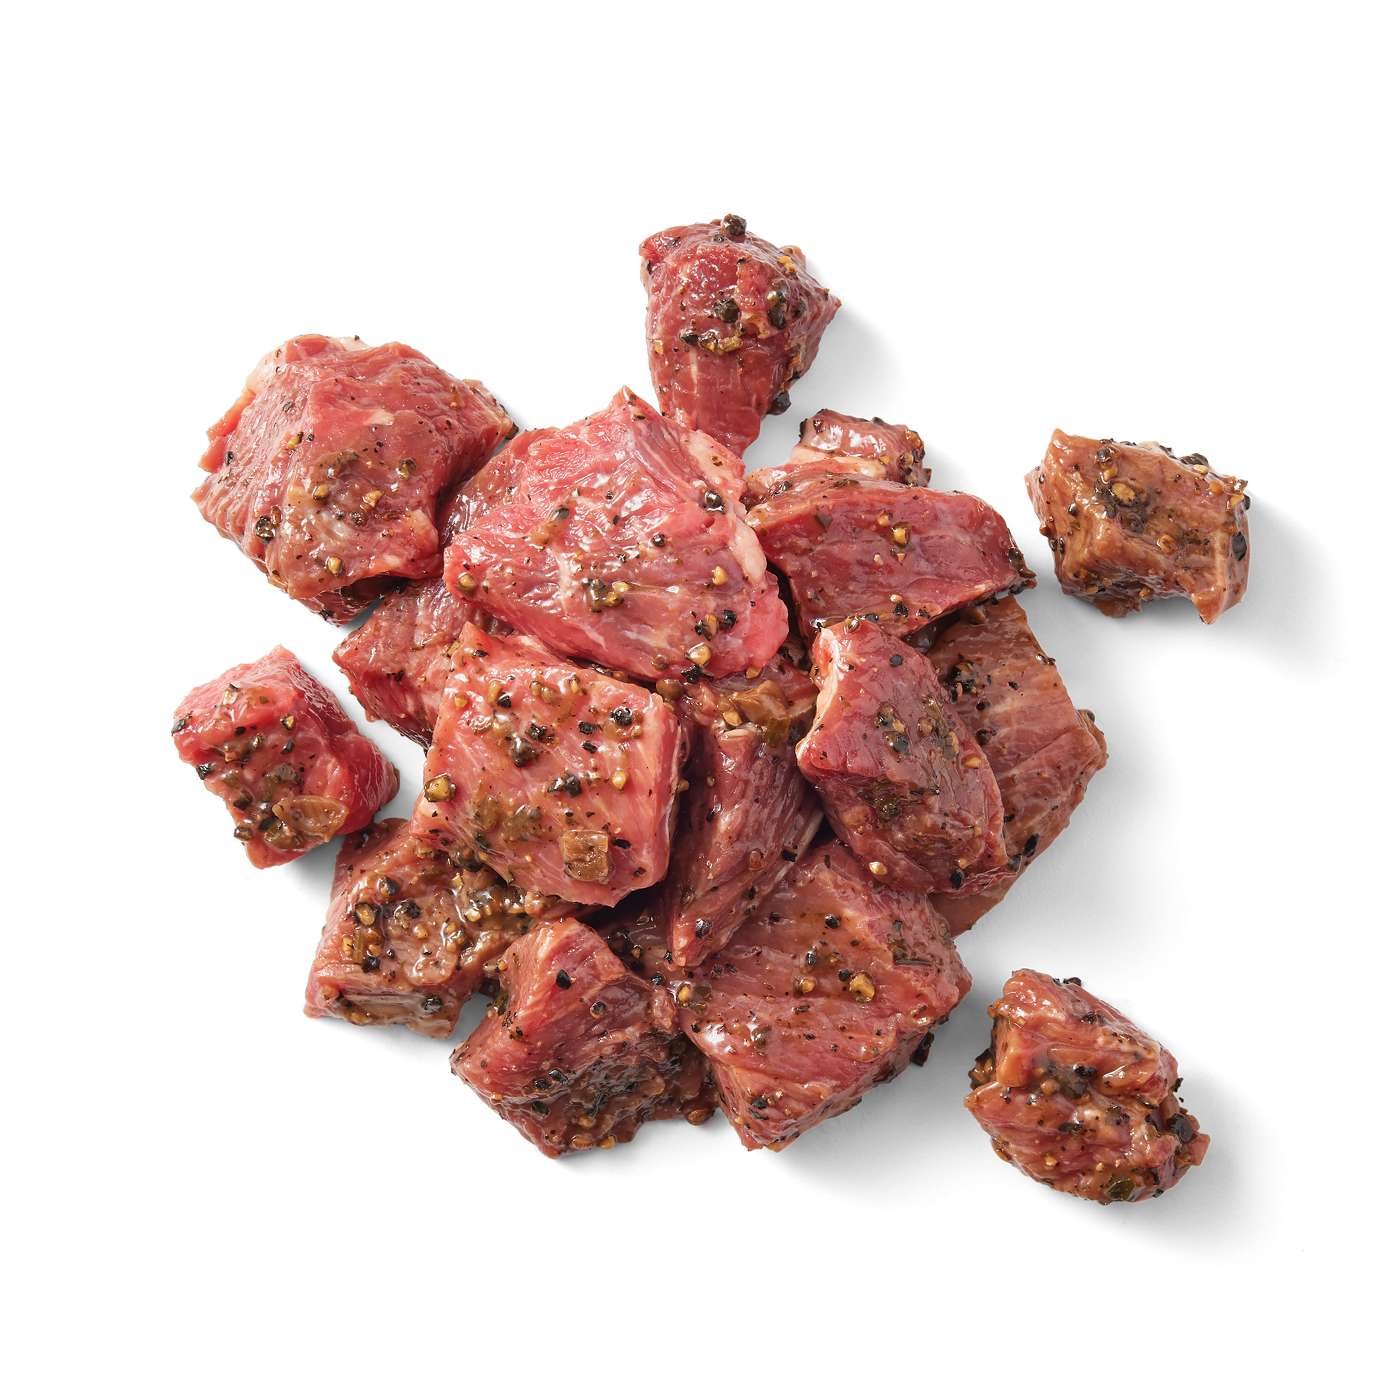 H-E-B Meat Market Marinated Boneless Beef Steak Tips - Garlic Peppercorn; image 1 of 3